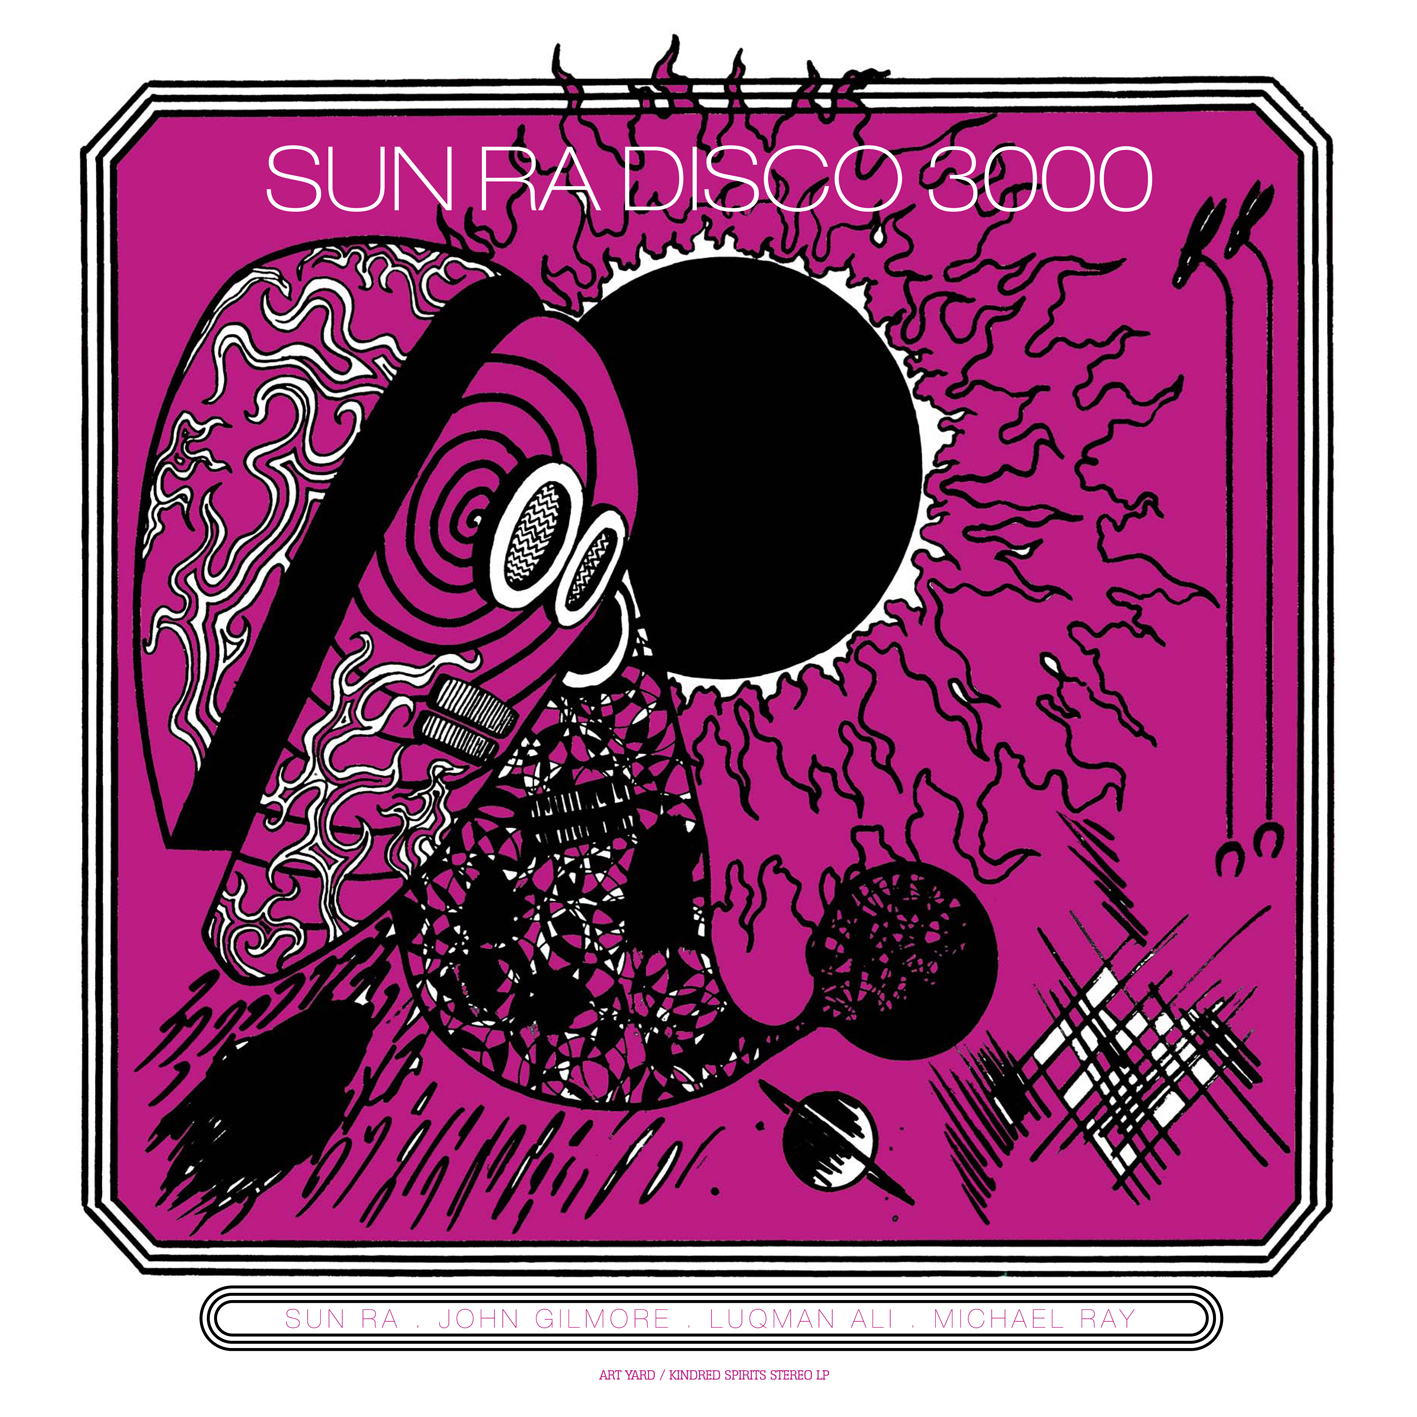 Album of the week: Sun RA – Disco 3000